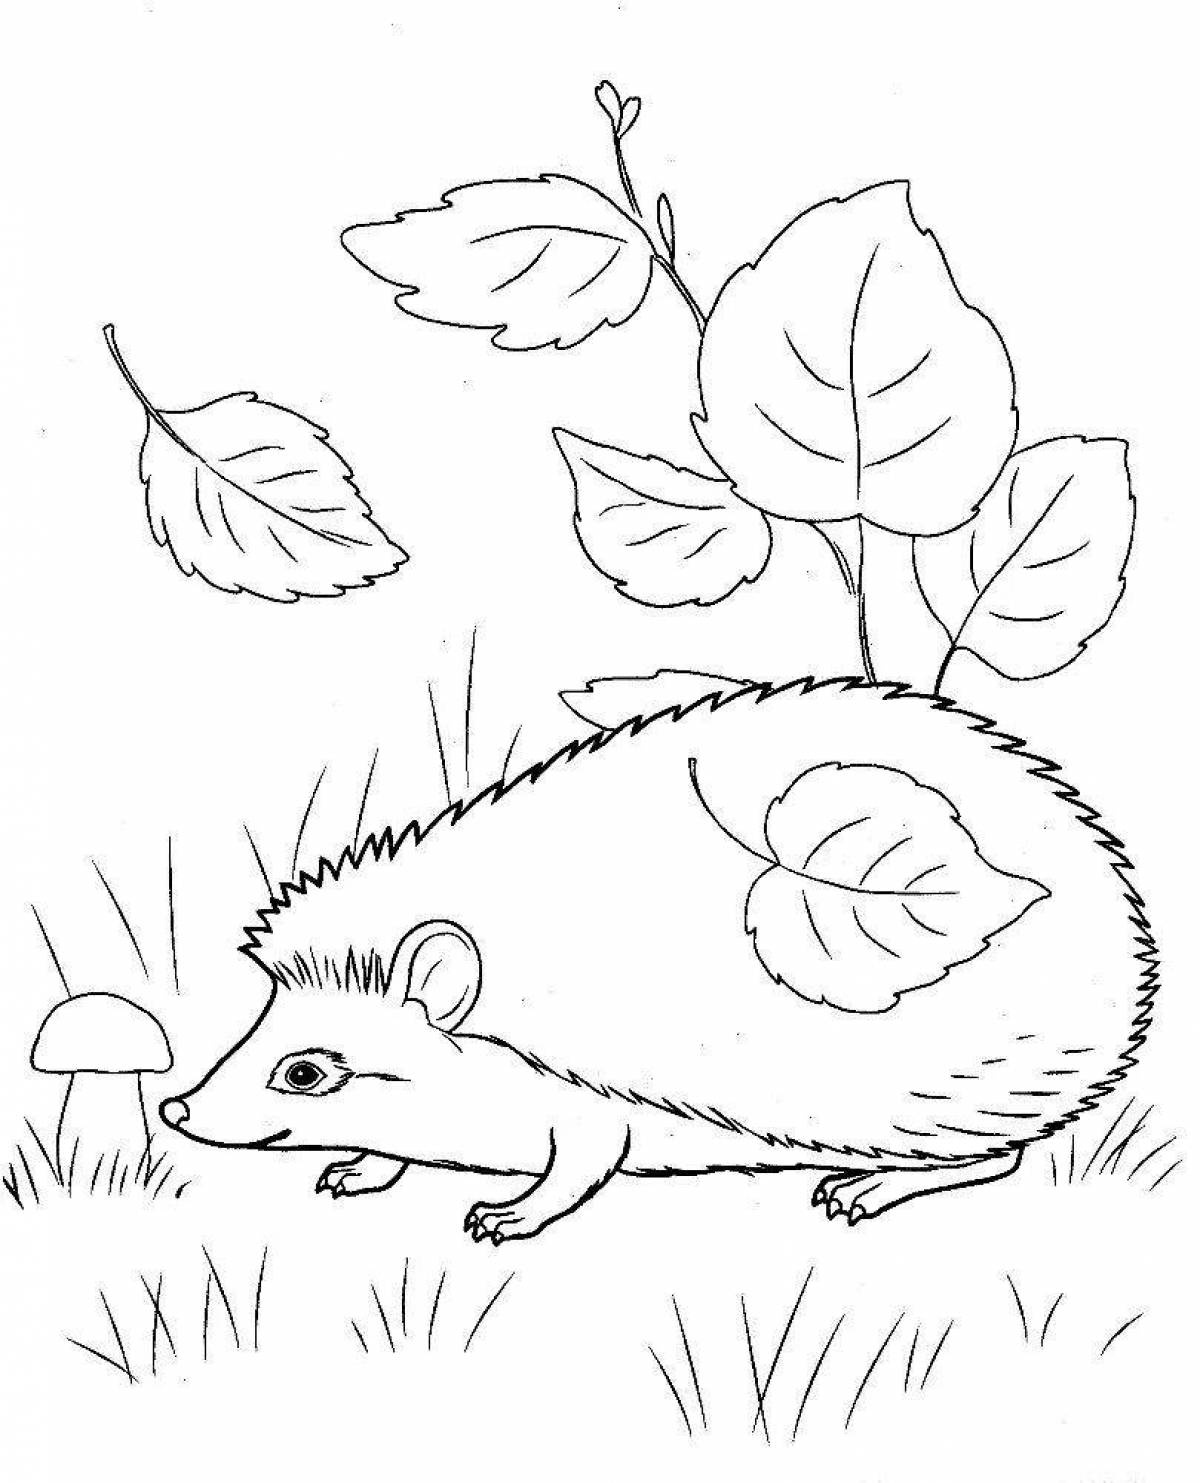 Sparkling hedgehog in the forest